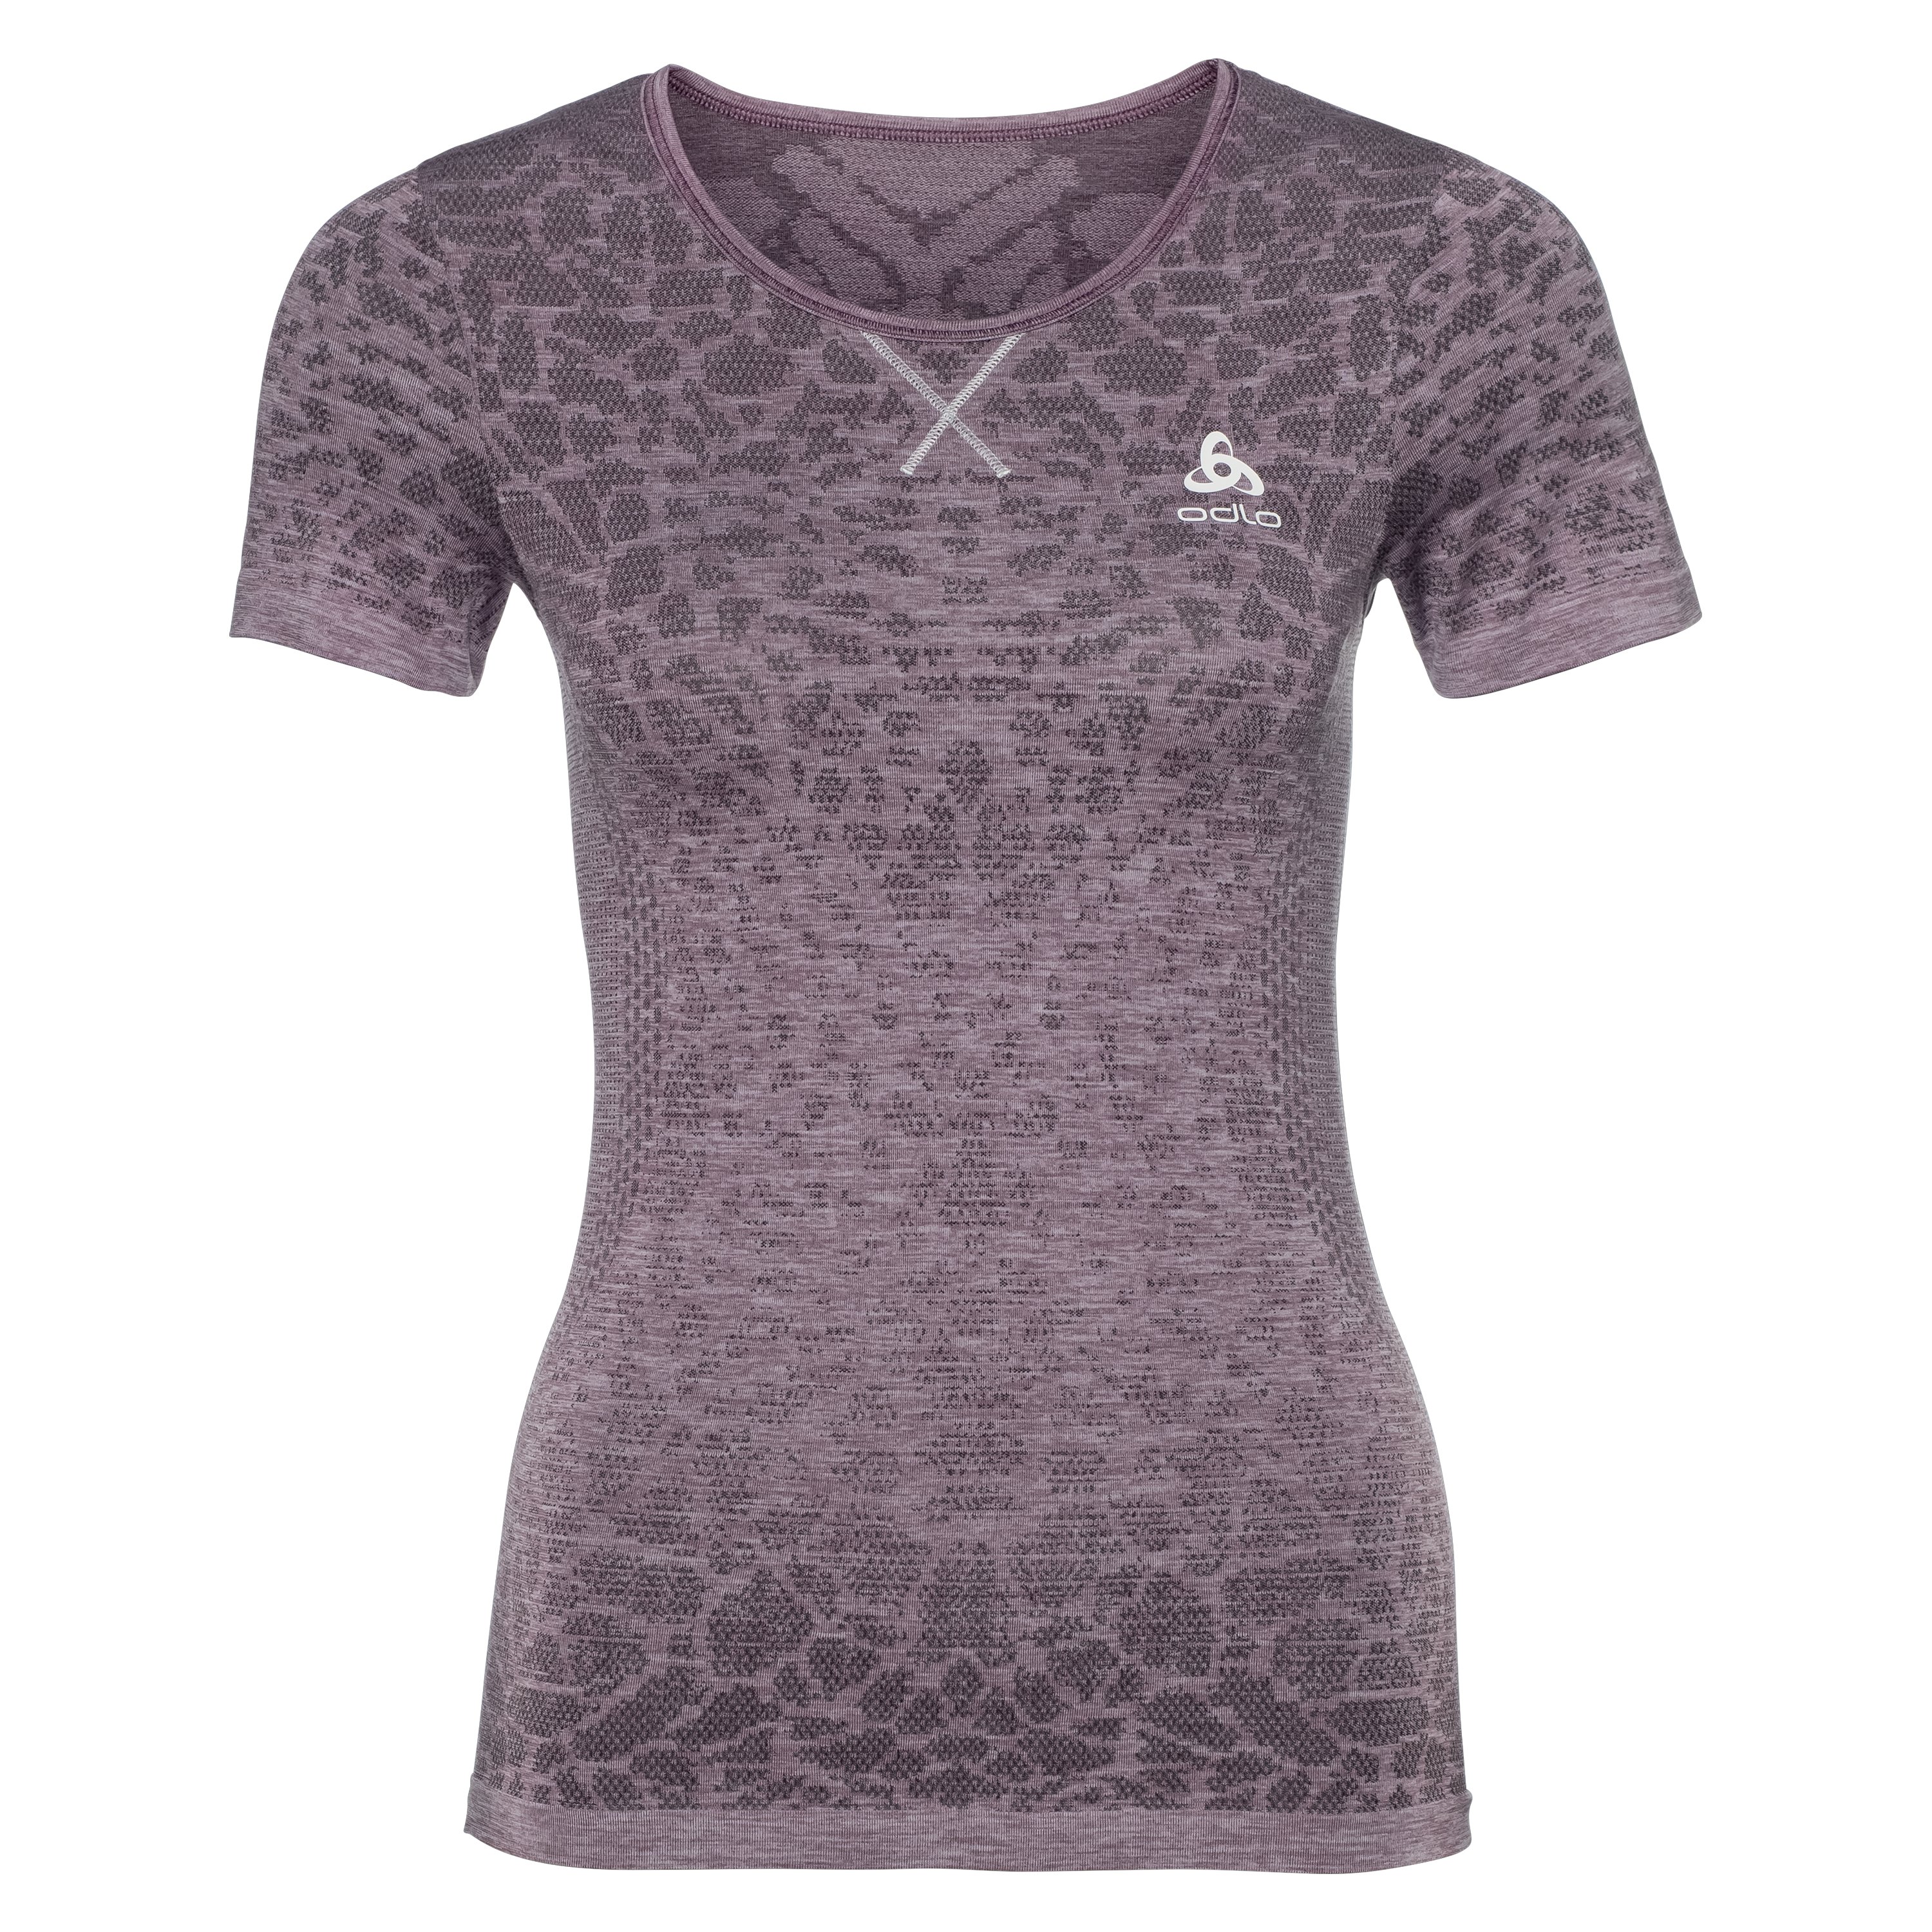 ODLO Blackcomb Light Base Layer T-Shirt für Damen, XS, violet